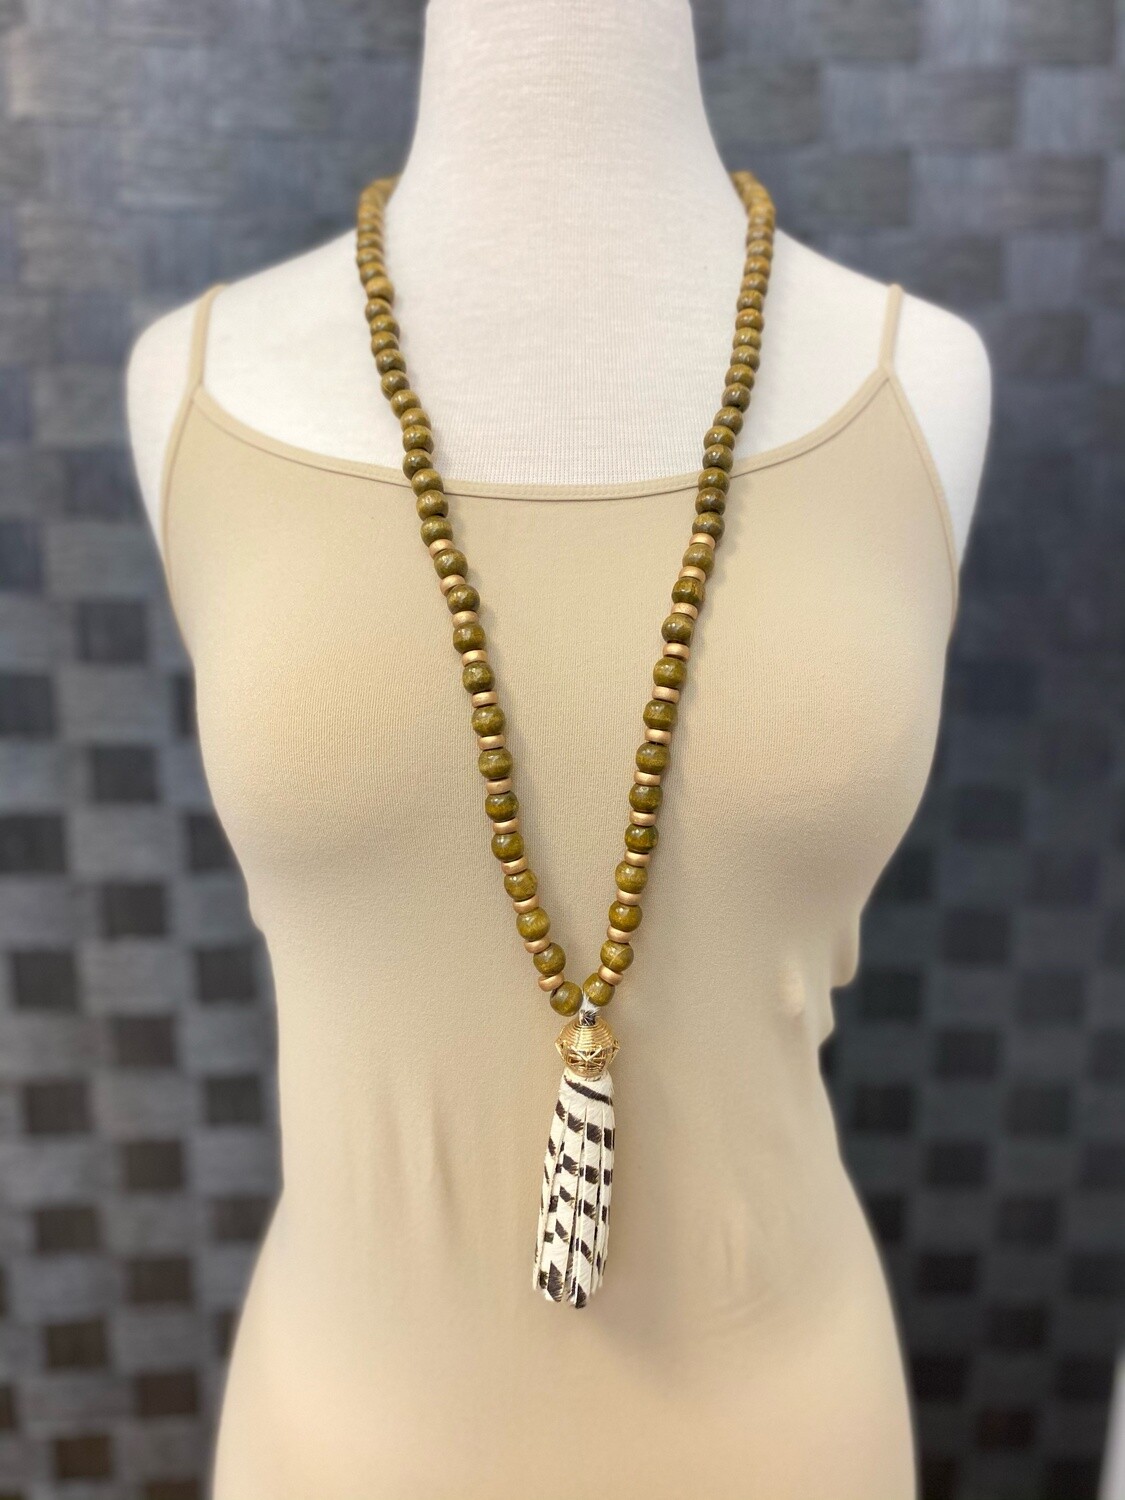 MS Necklace  Beaded Tassel Cheetah/Zebra